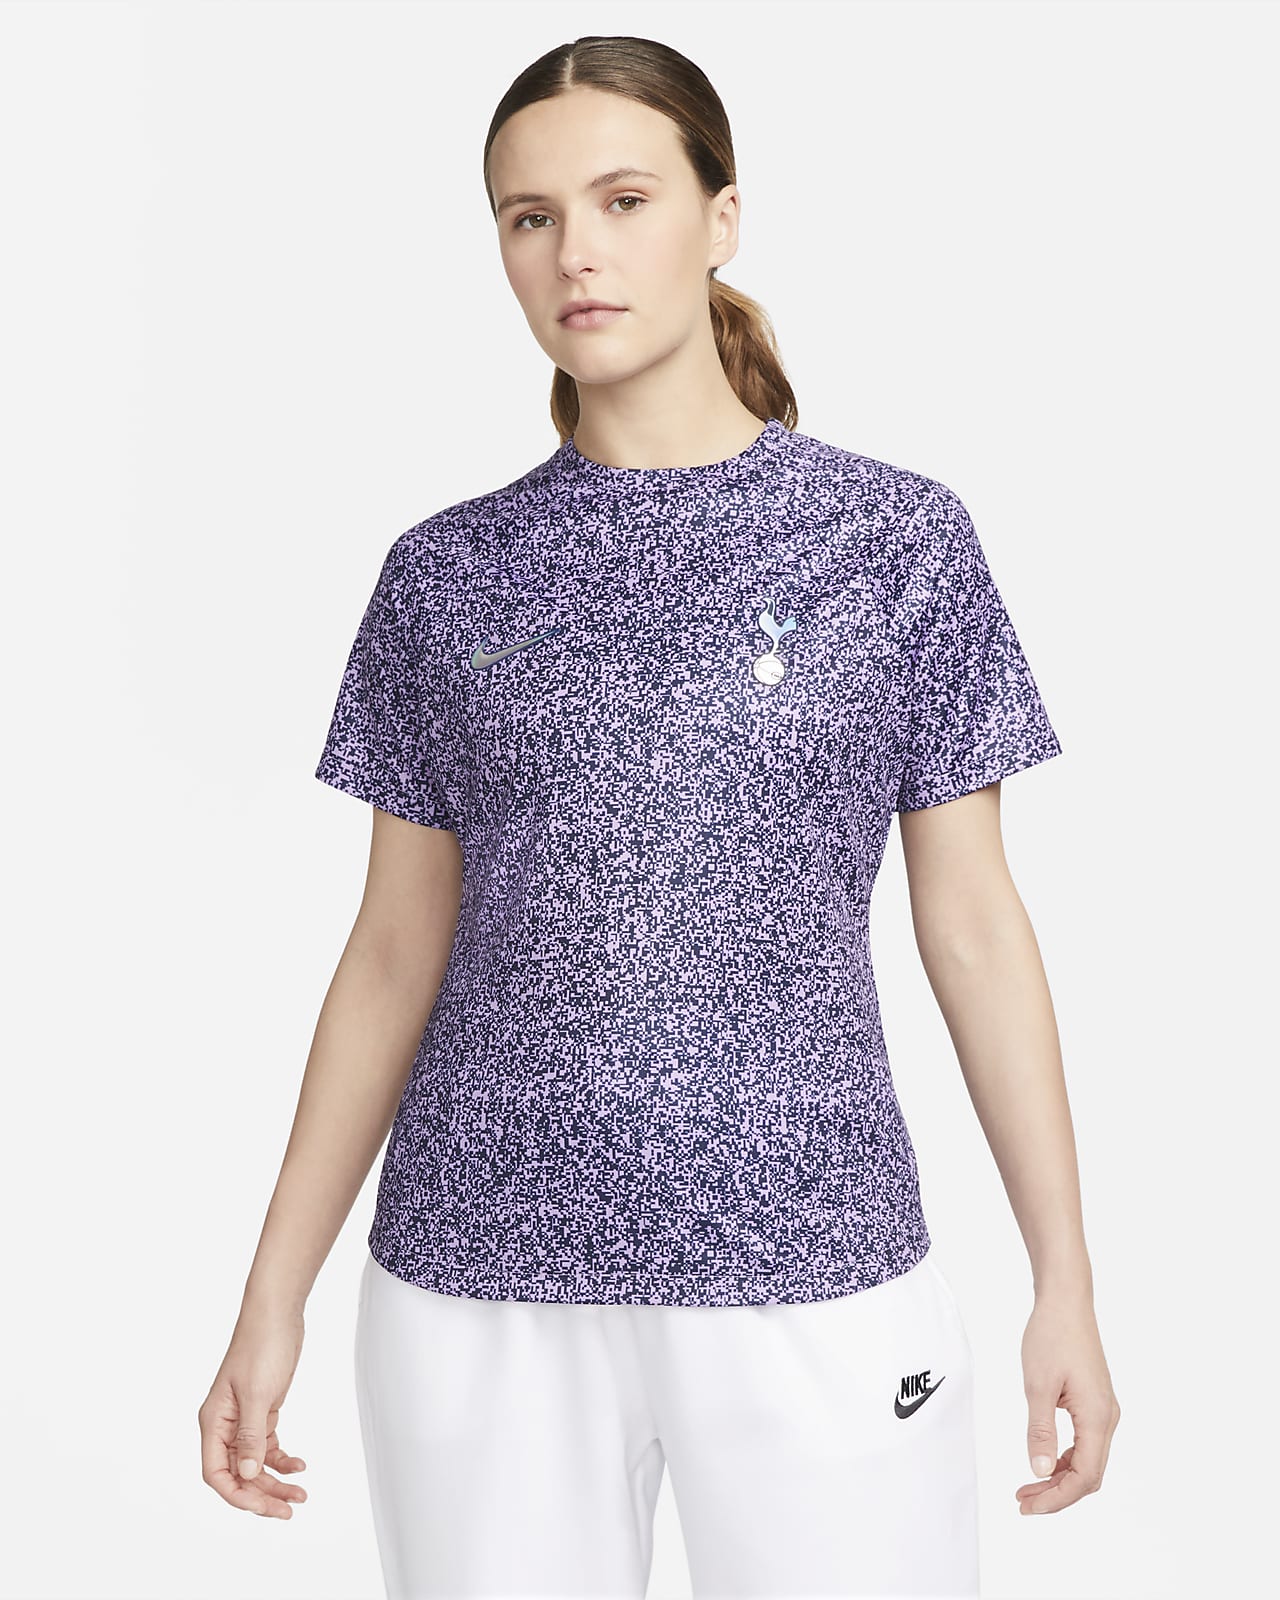 Tottenham Hotspur Academy Pro Camiseta de fútbol para antes del partido Nike Dri-FIT - Mujer